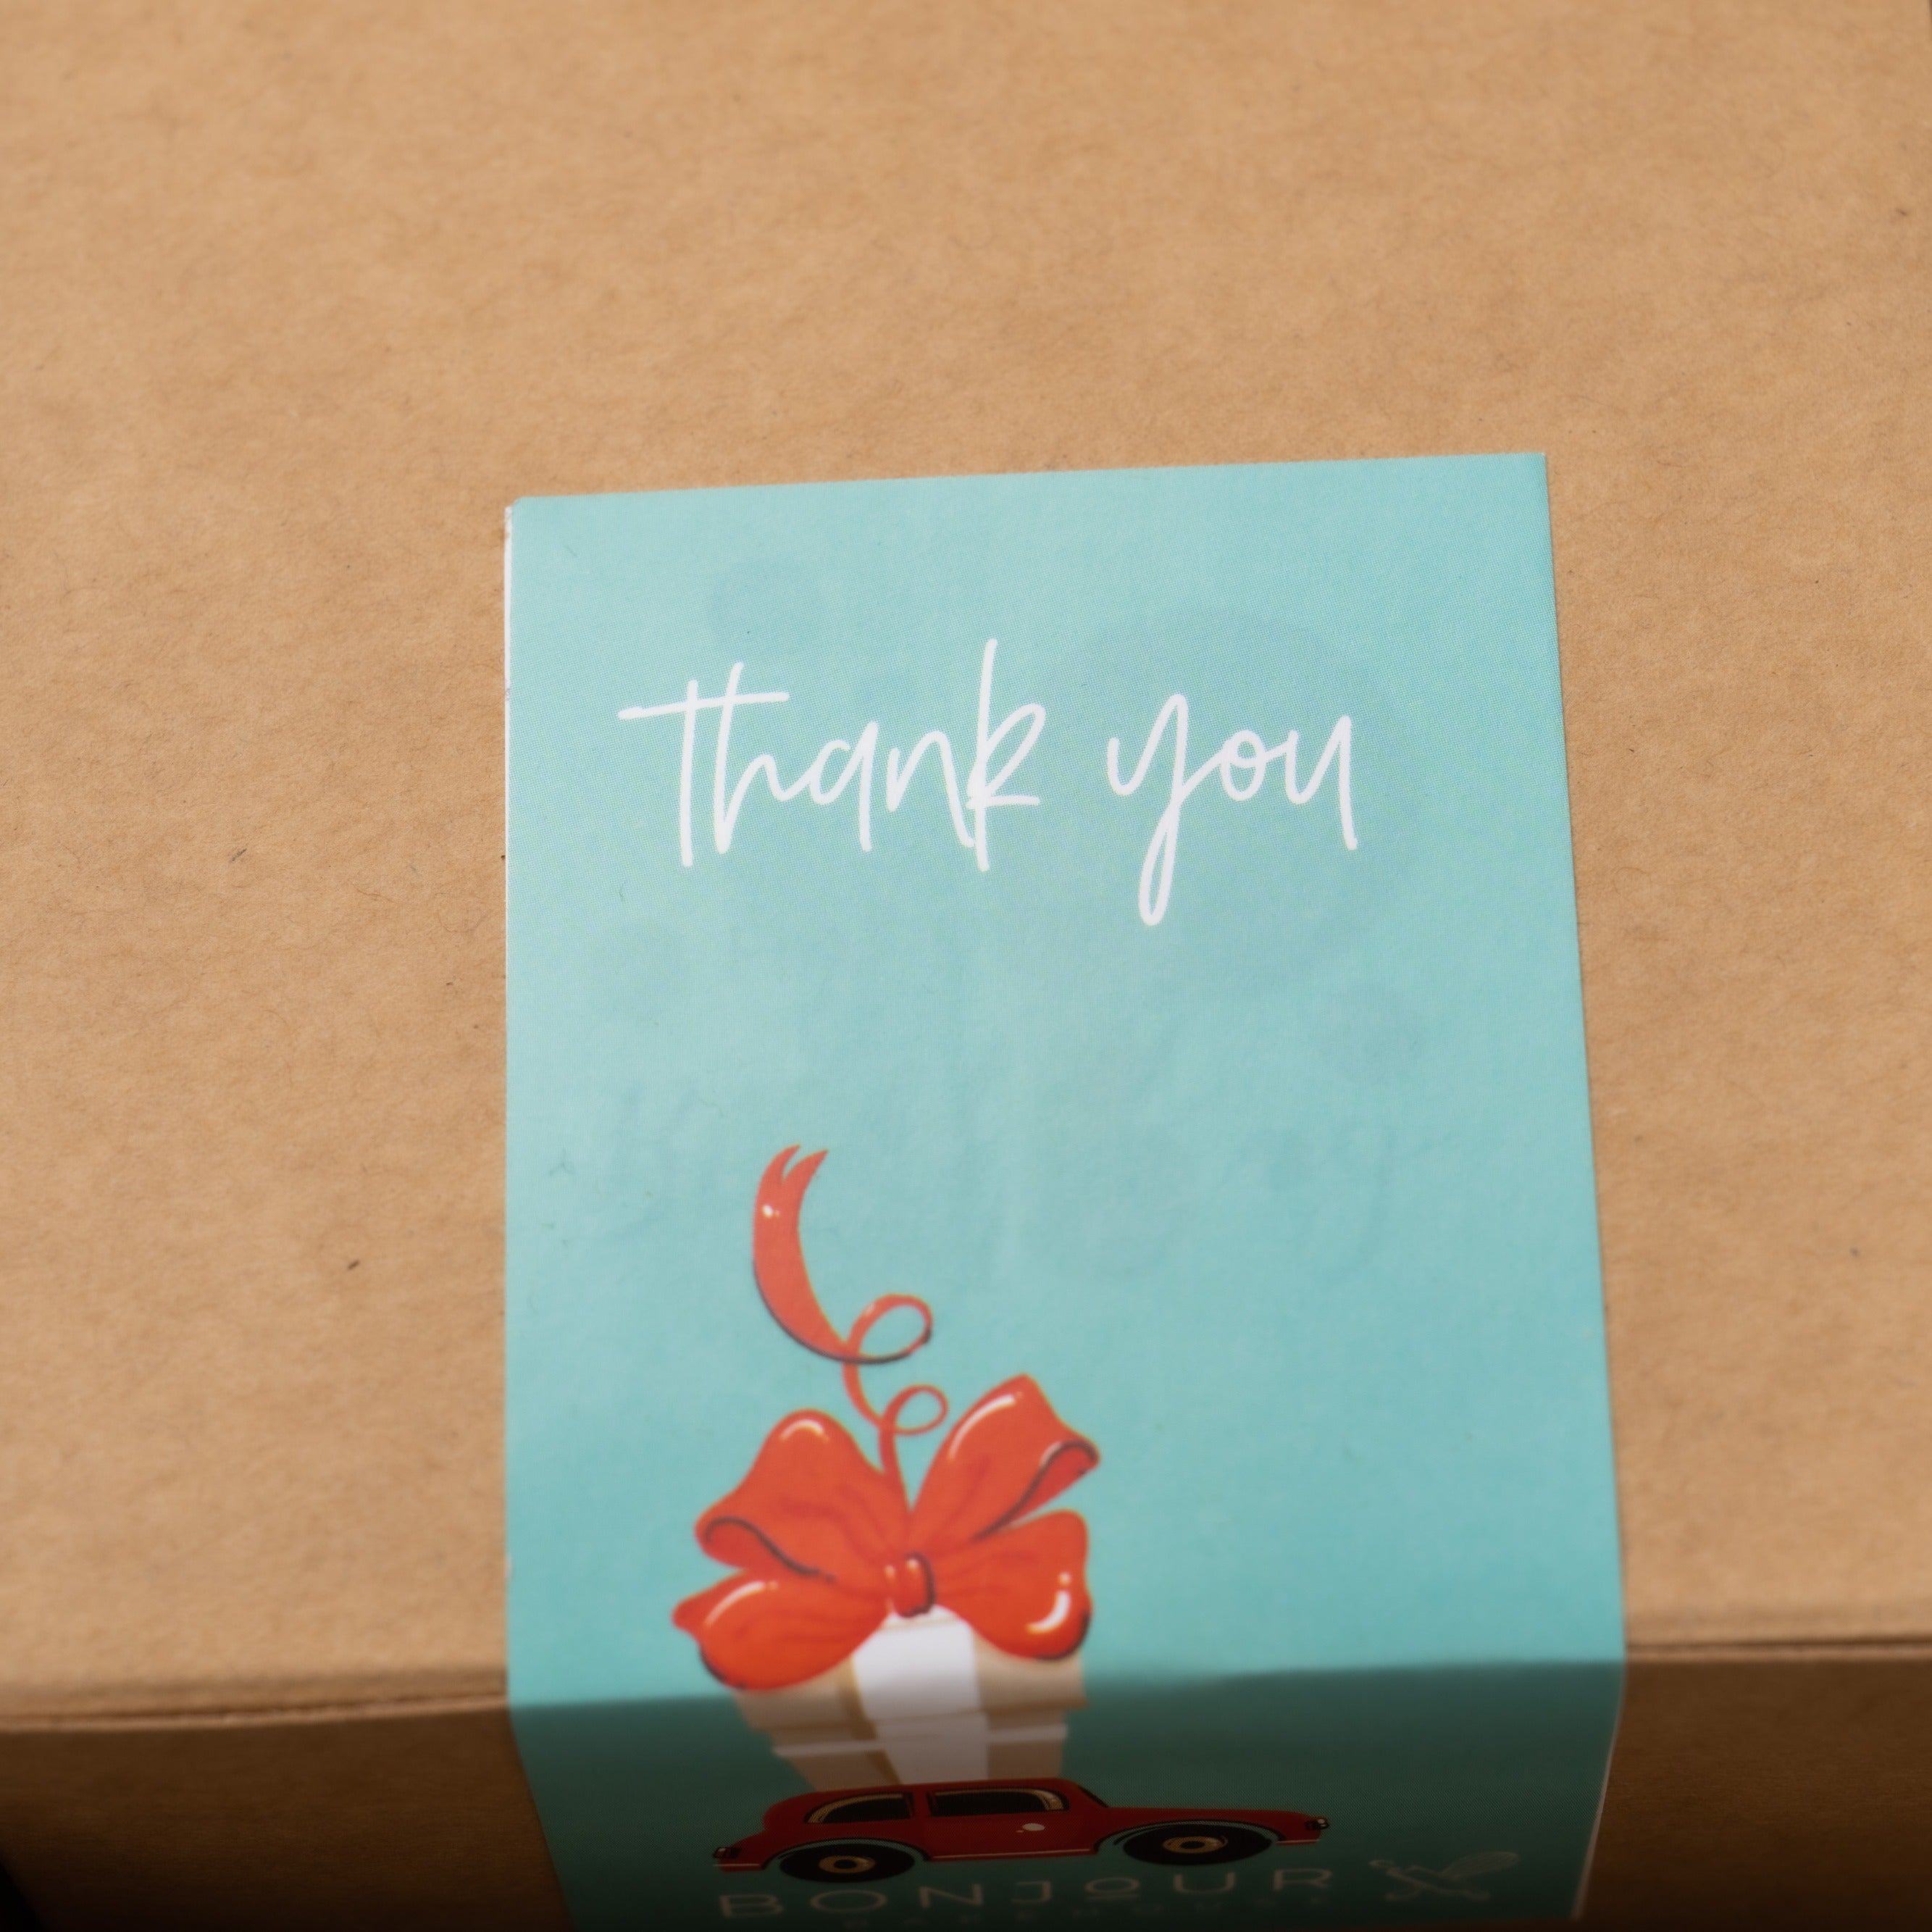 1 Cookies & Tea Gift Box - Administrative Appreciation Day